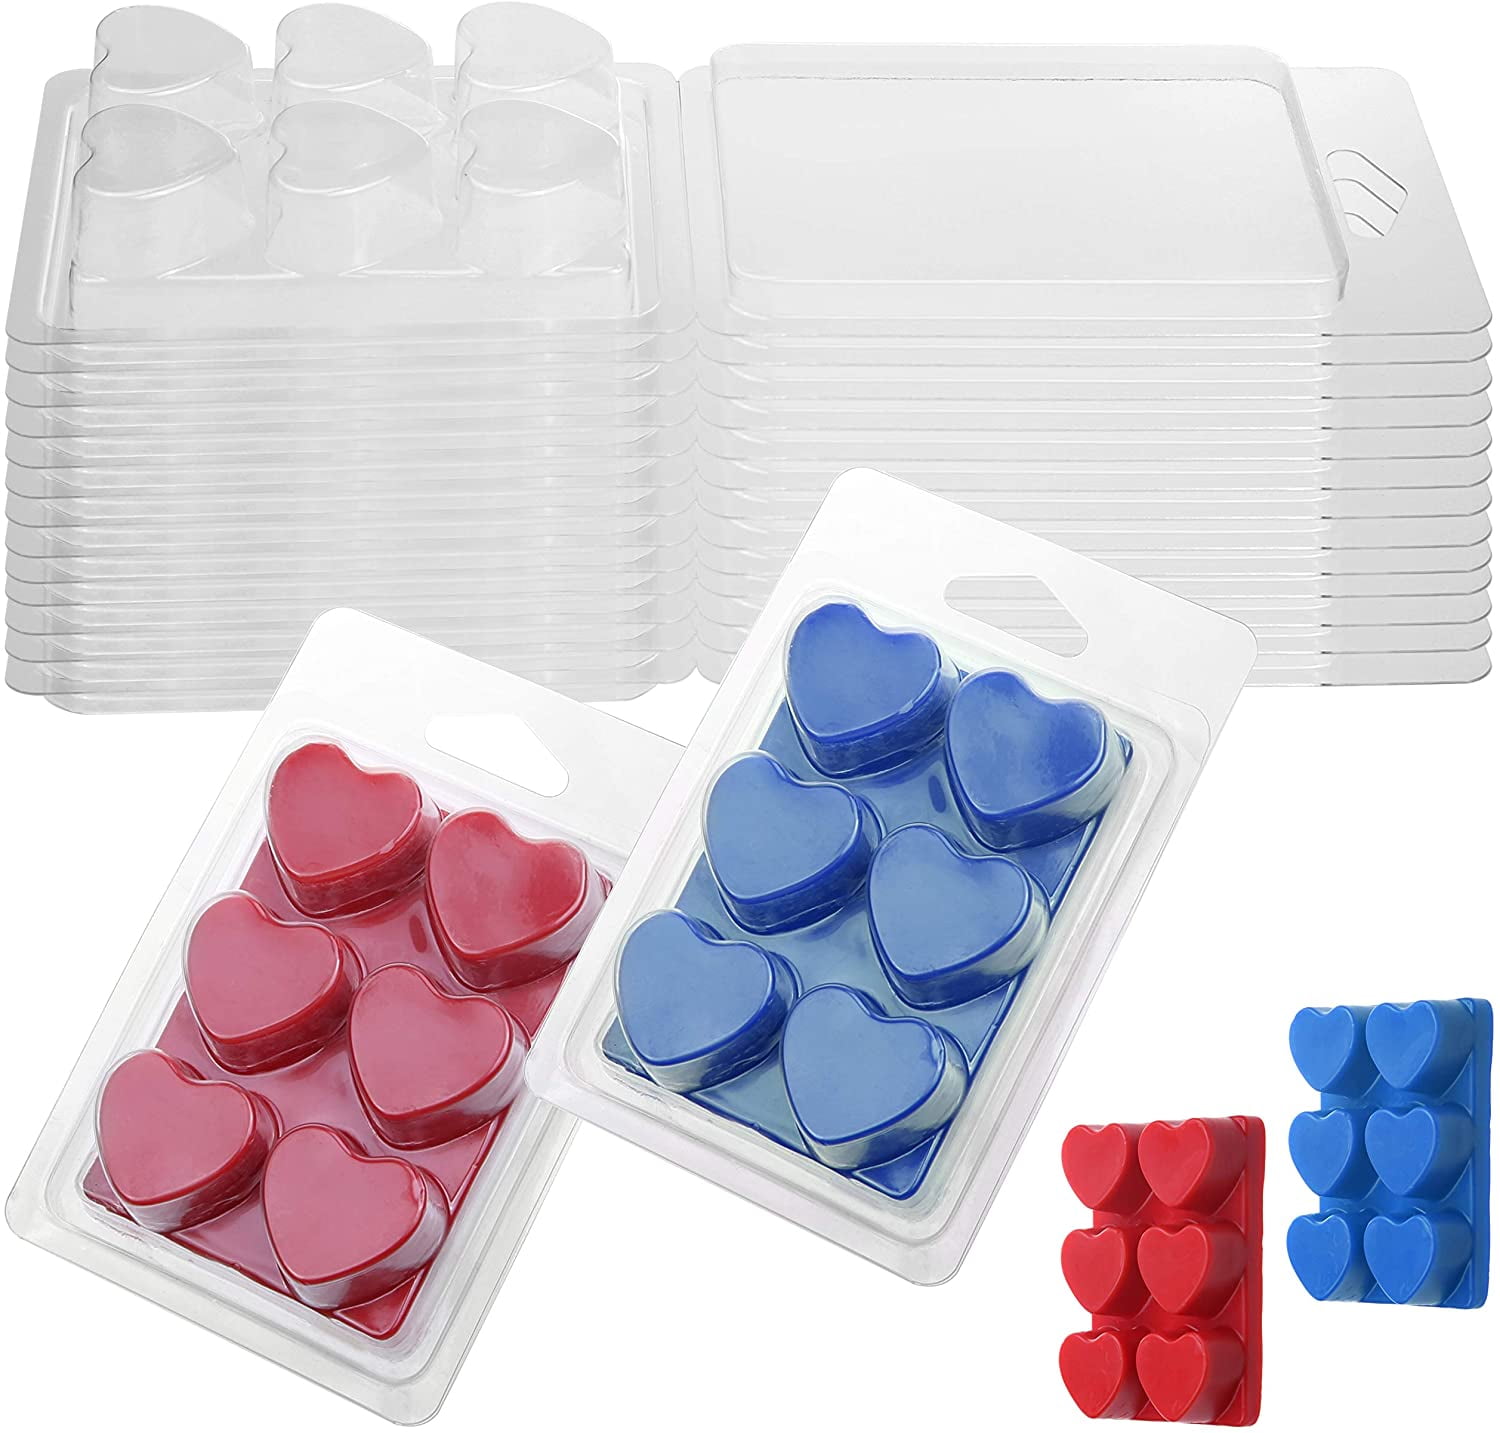  15 Pack Wax Melt Molds, 6 Cavity Clear Empty Plastic